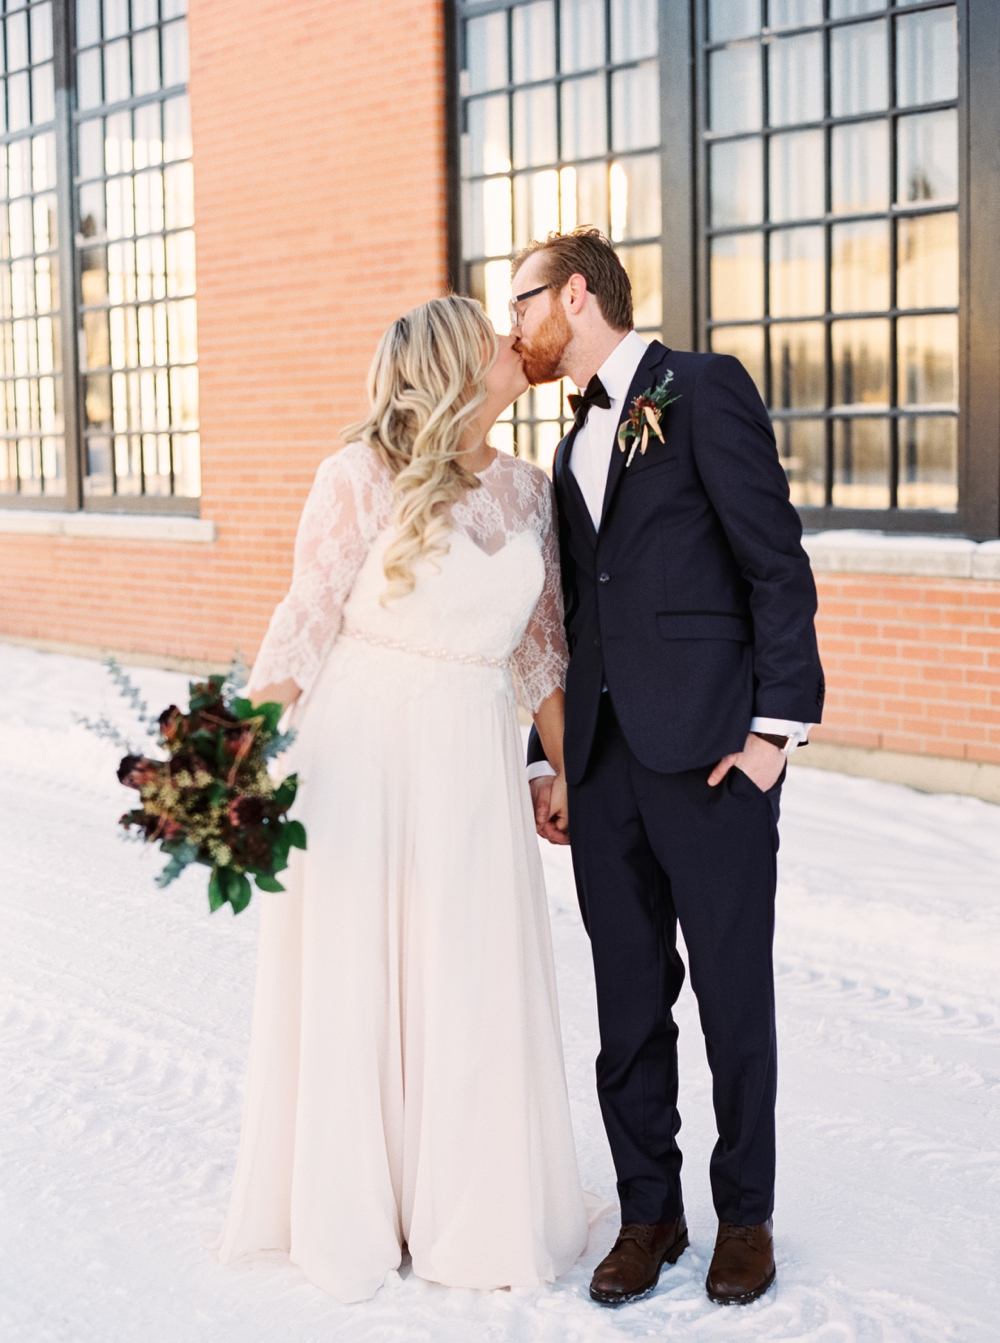 Calgary Wedding Photographers | New years Eve Wedding | Heritage Park guns Dairy Barn Wedding | Blush and Rose Gold | Winter Wedding